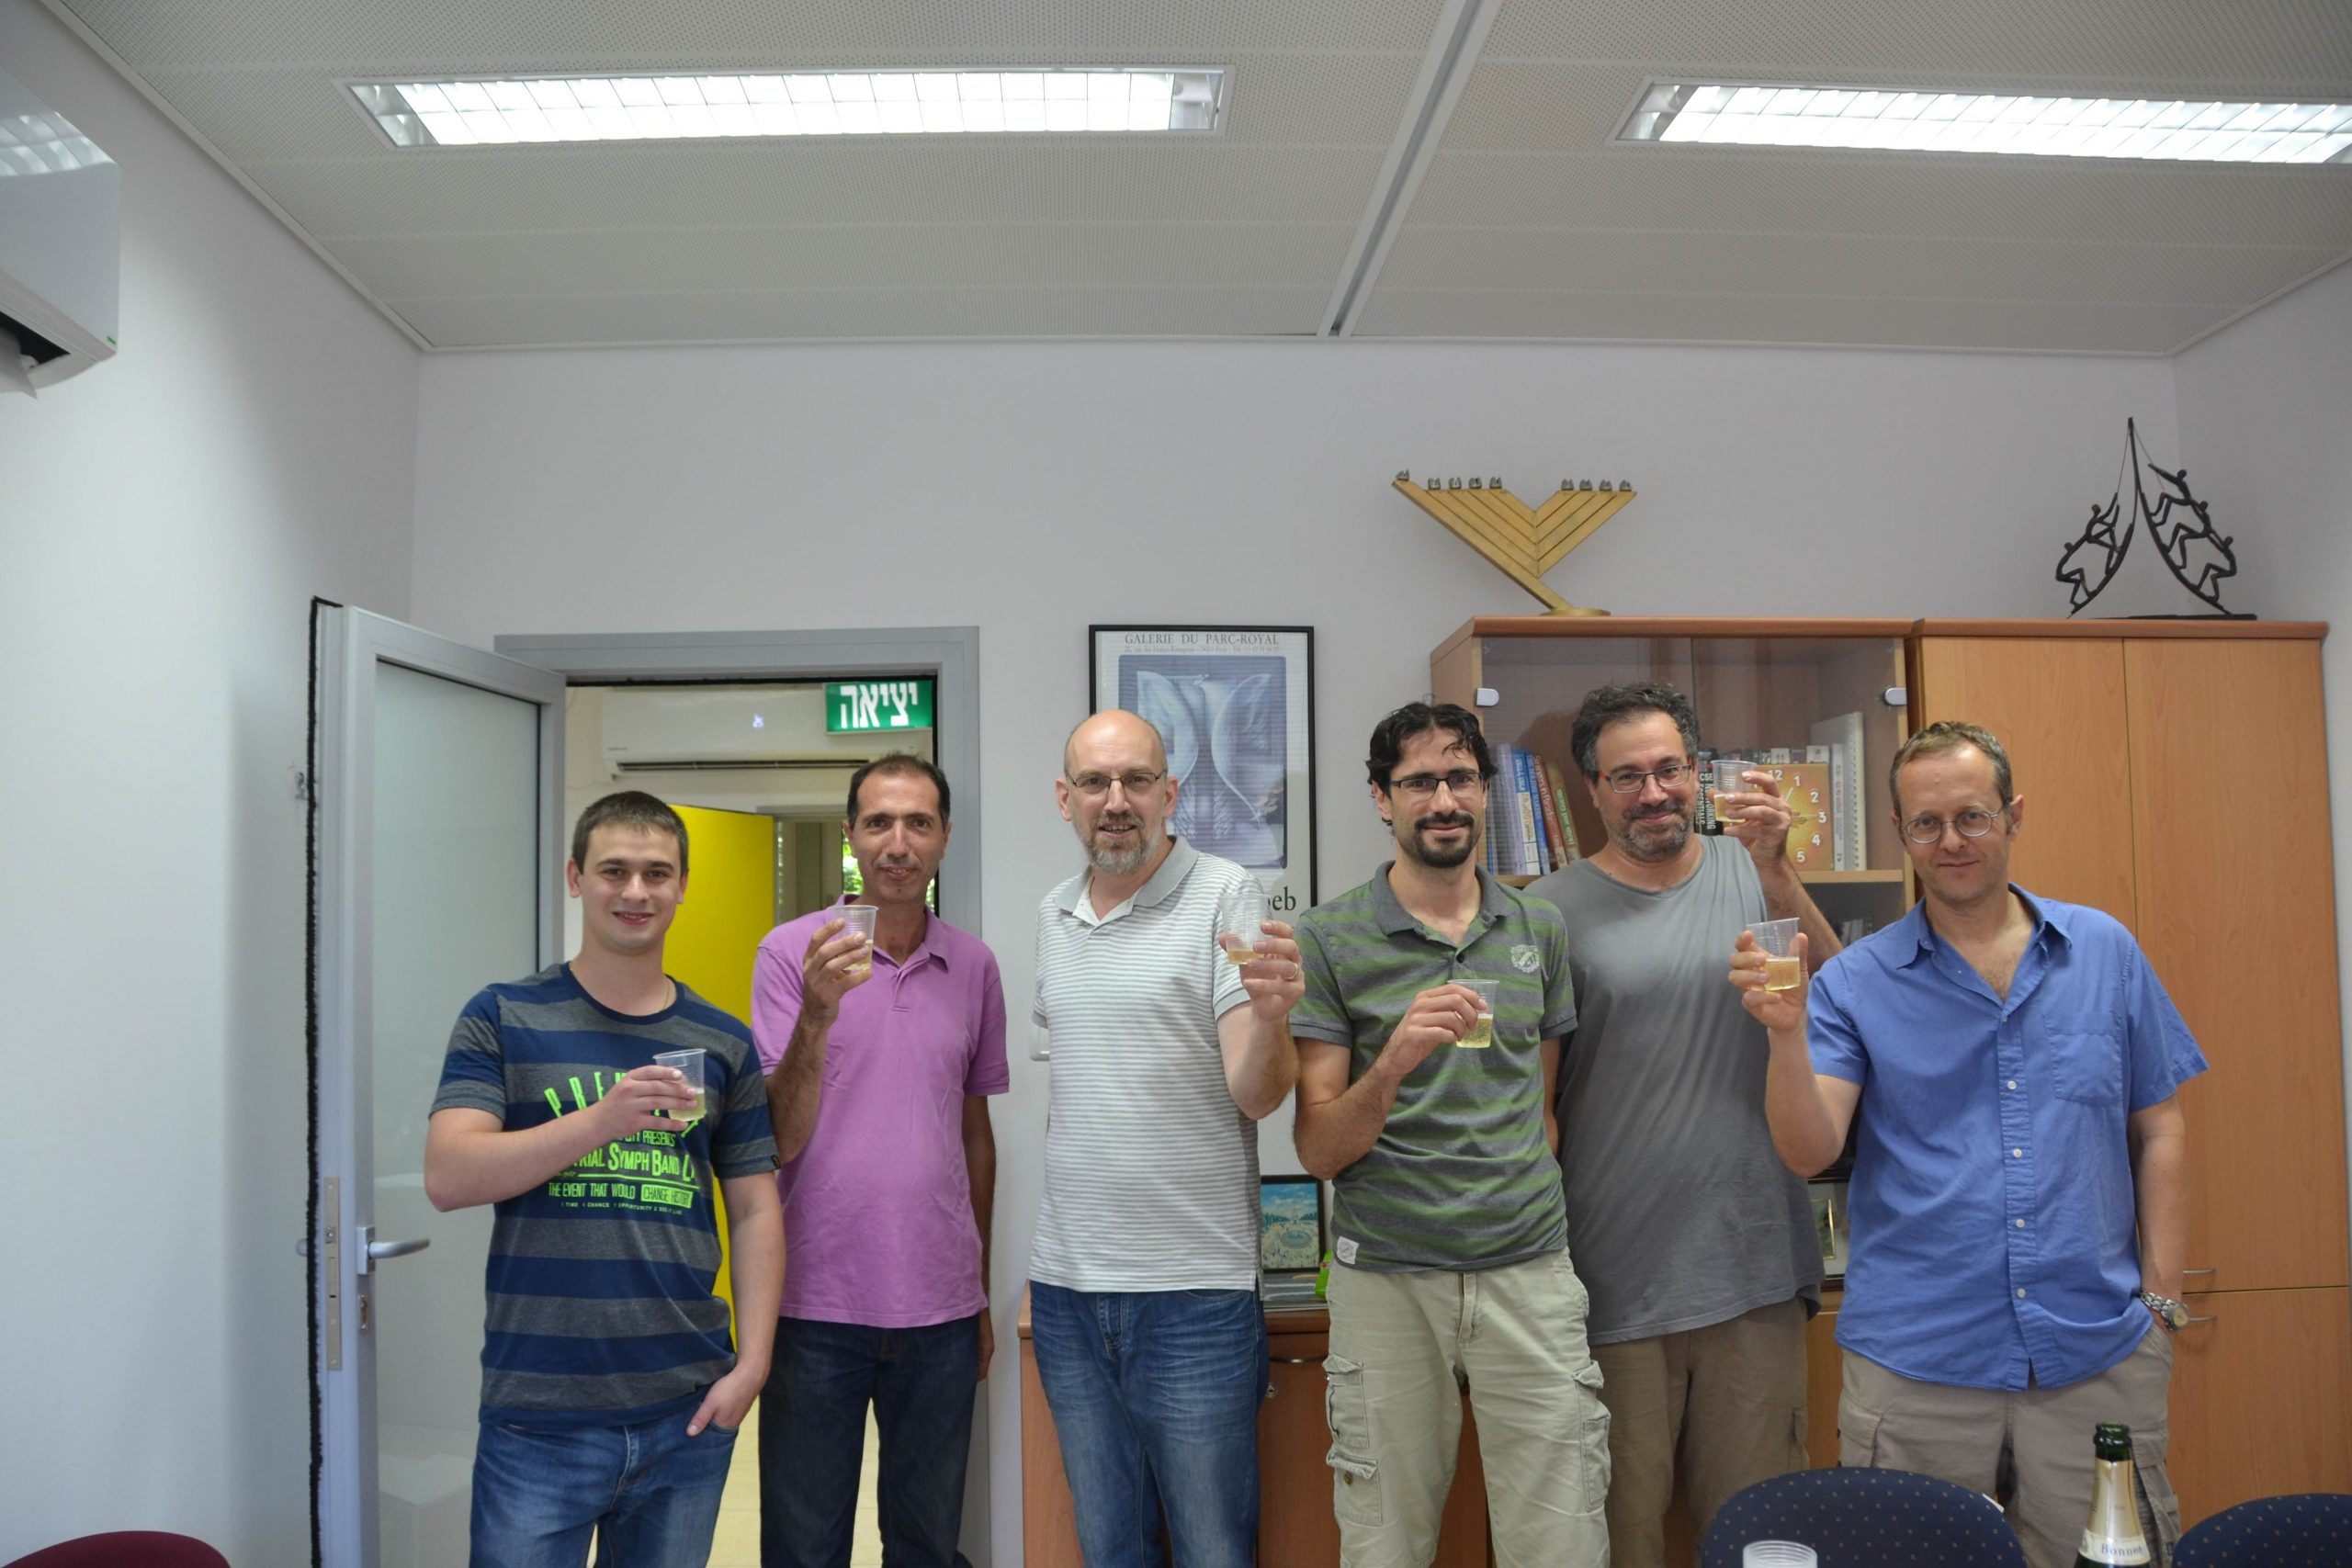 Igor Chebotar, Yair Bellehsen, Nimrod Lahav, Eyal Privman, Doron Chelouche, and Mickey Kosloff raising their glasses in honor of the Hive